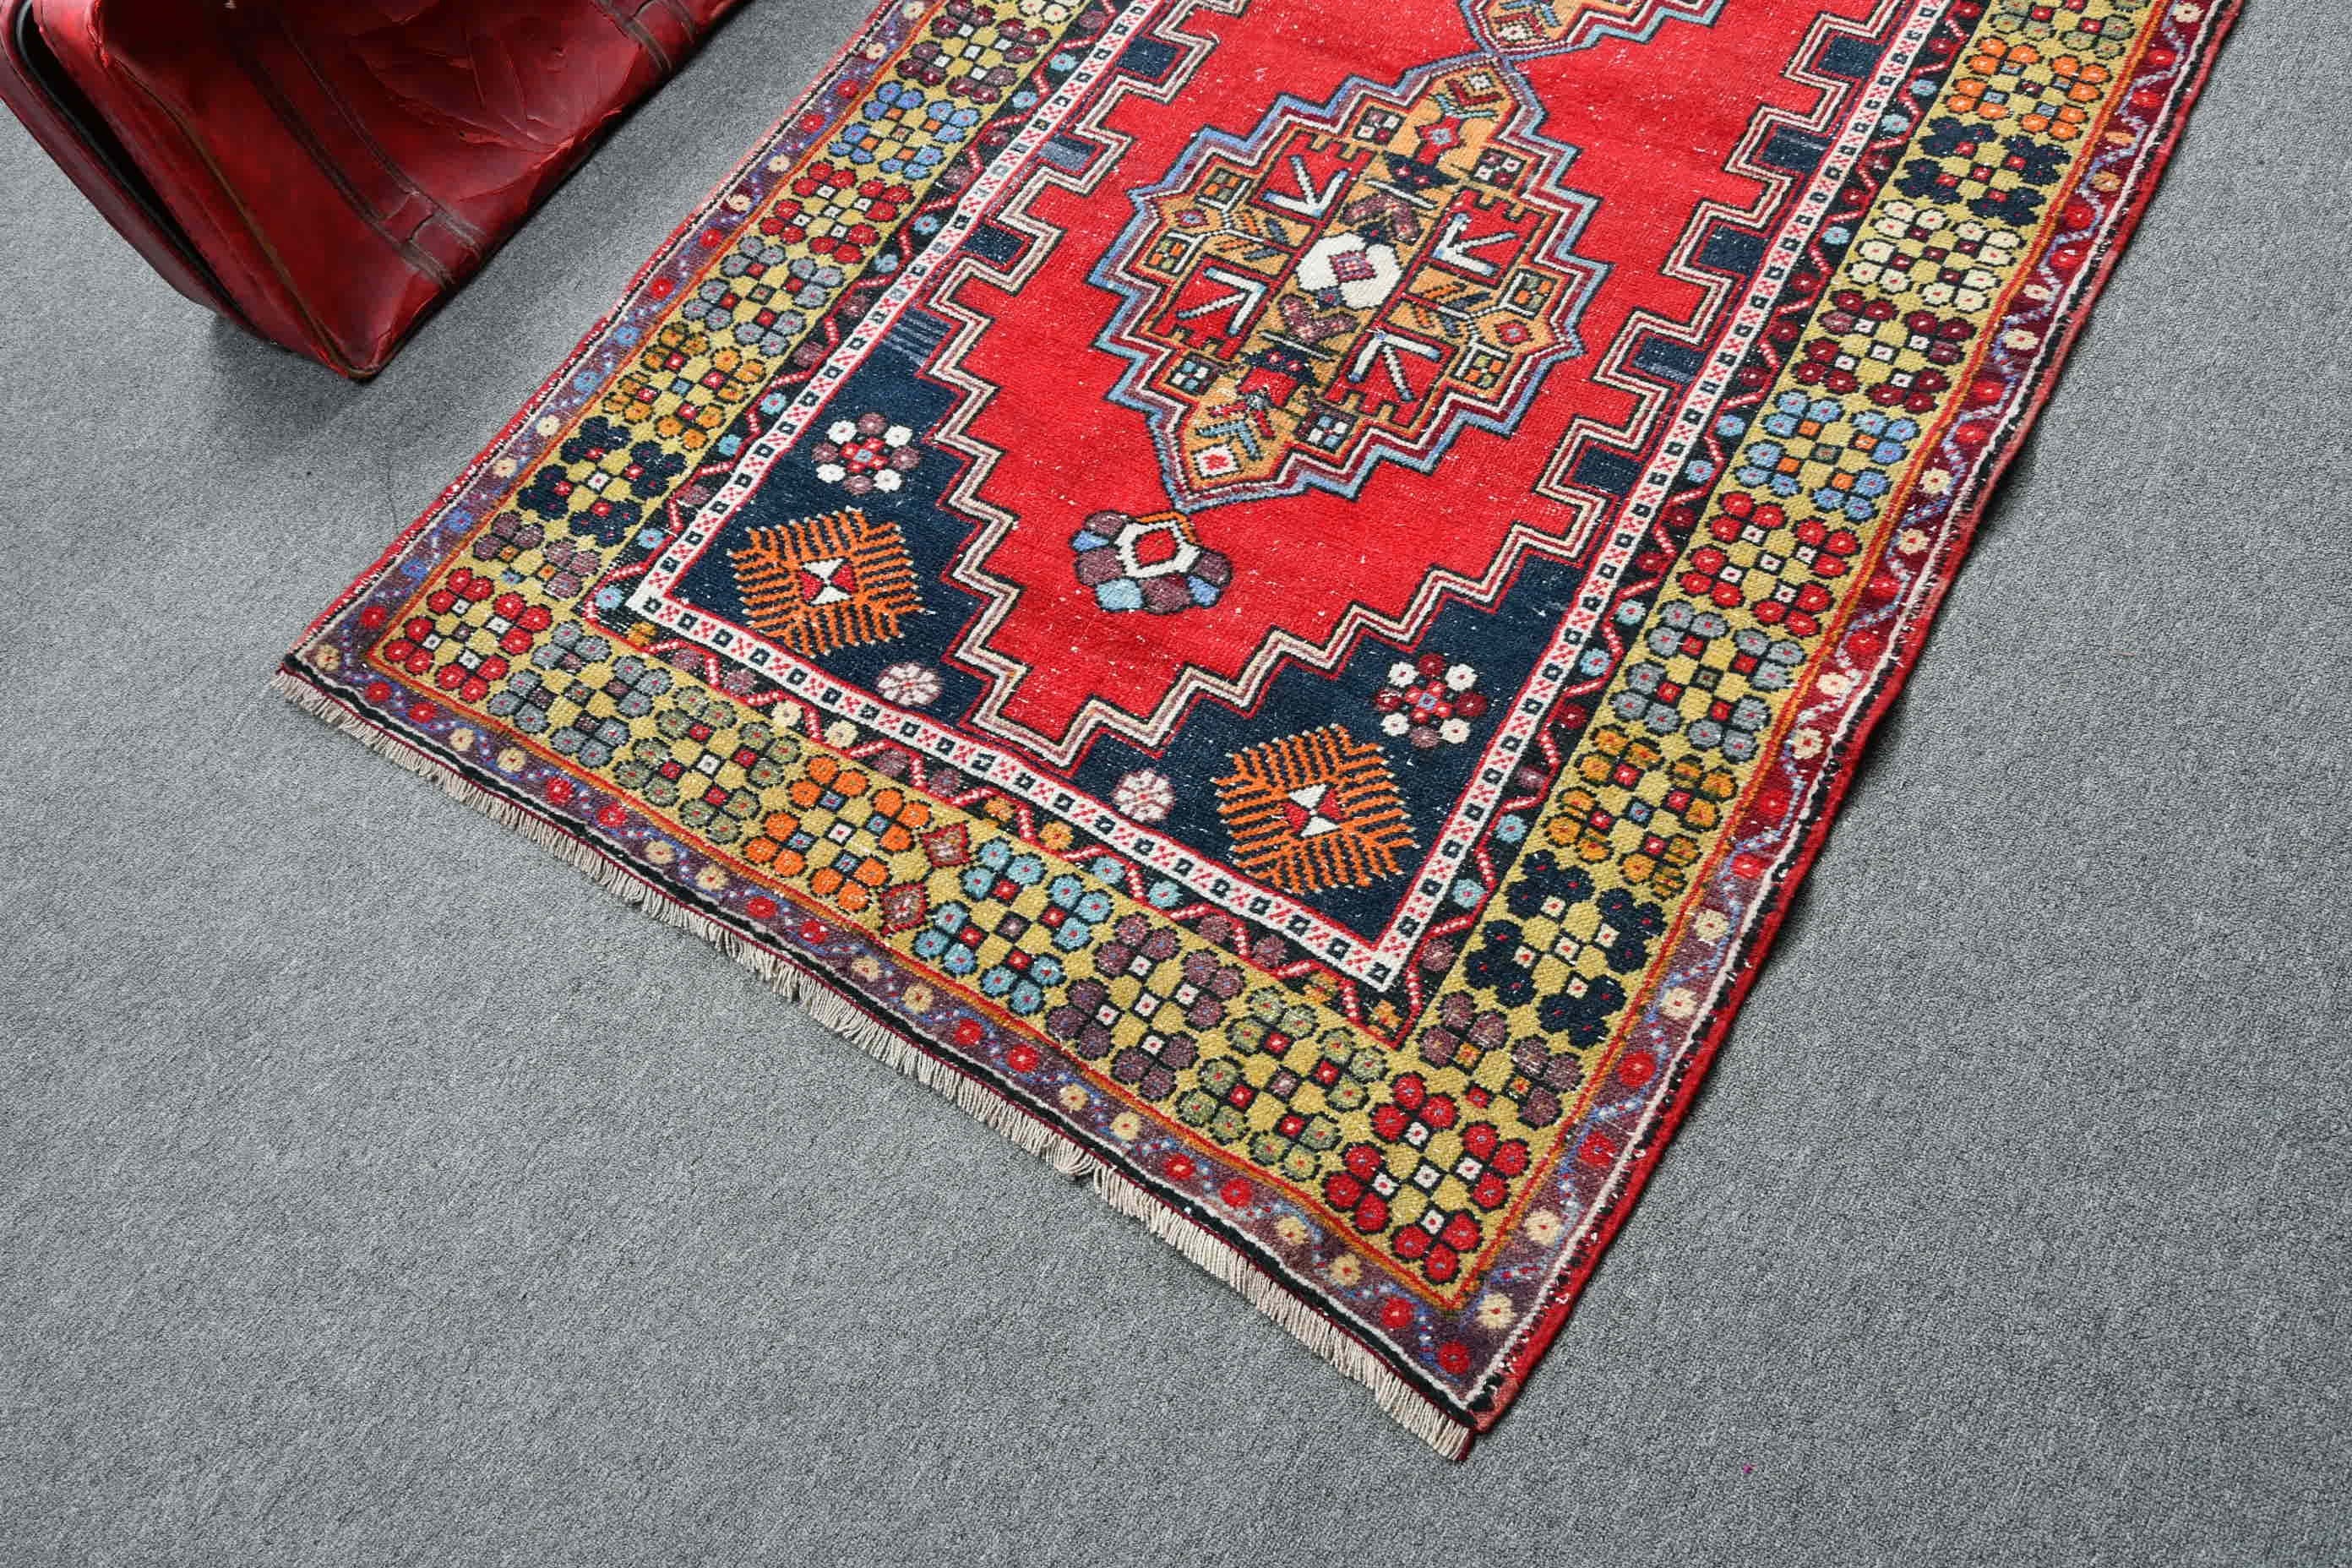 Vintage Rug, Bedroom Rugs, Living Room Rug, Anatolian Rugs, 3.7x6.9 ft Area Rugs, Turkish Rug, Muted Rugs, Red Floor Rugs, Dining Room Rugs